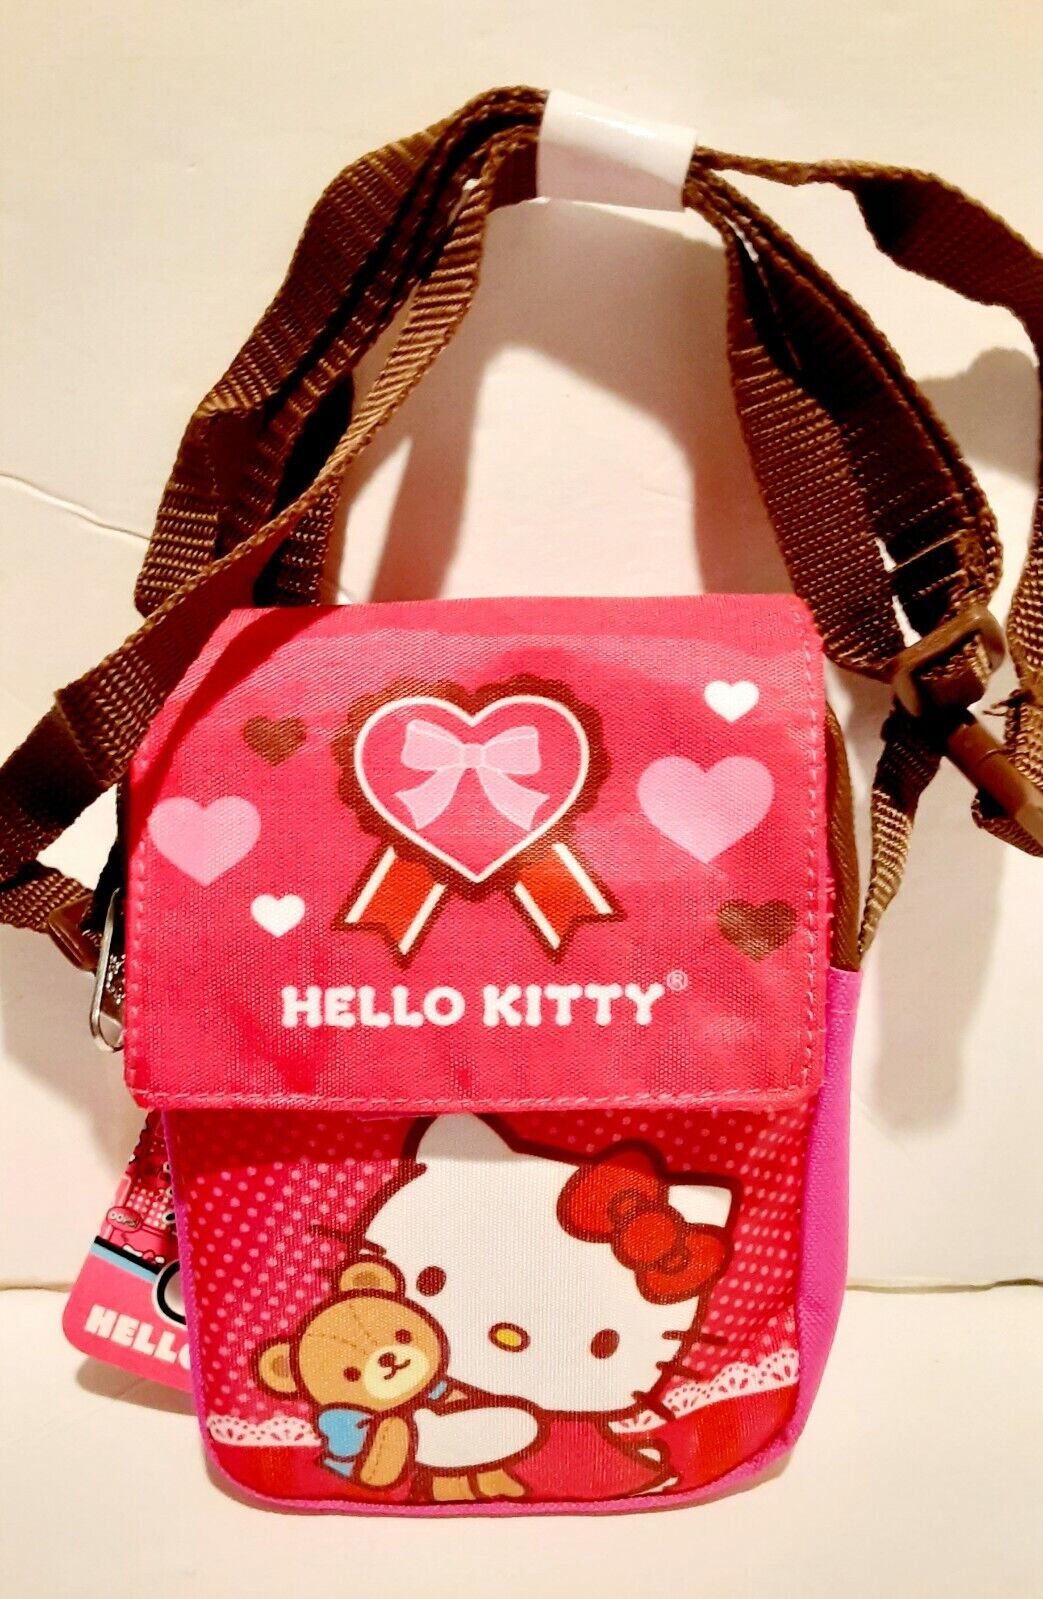 Sanrio Hello kitty BAG  PINK  SATCHEL GIRLS CROSSBODY PURSE Cell Phone Bag